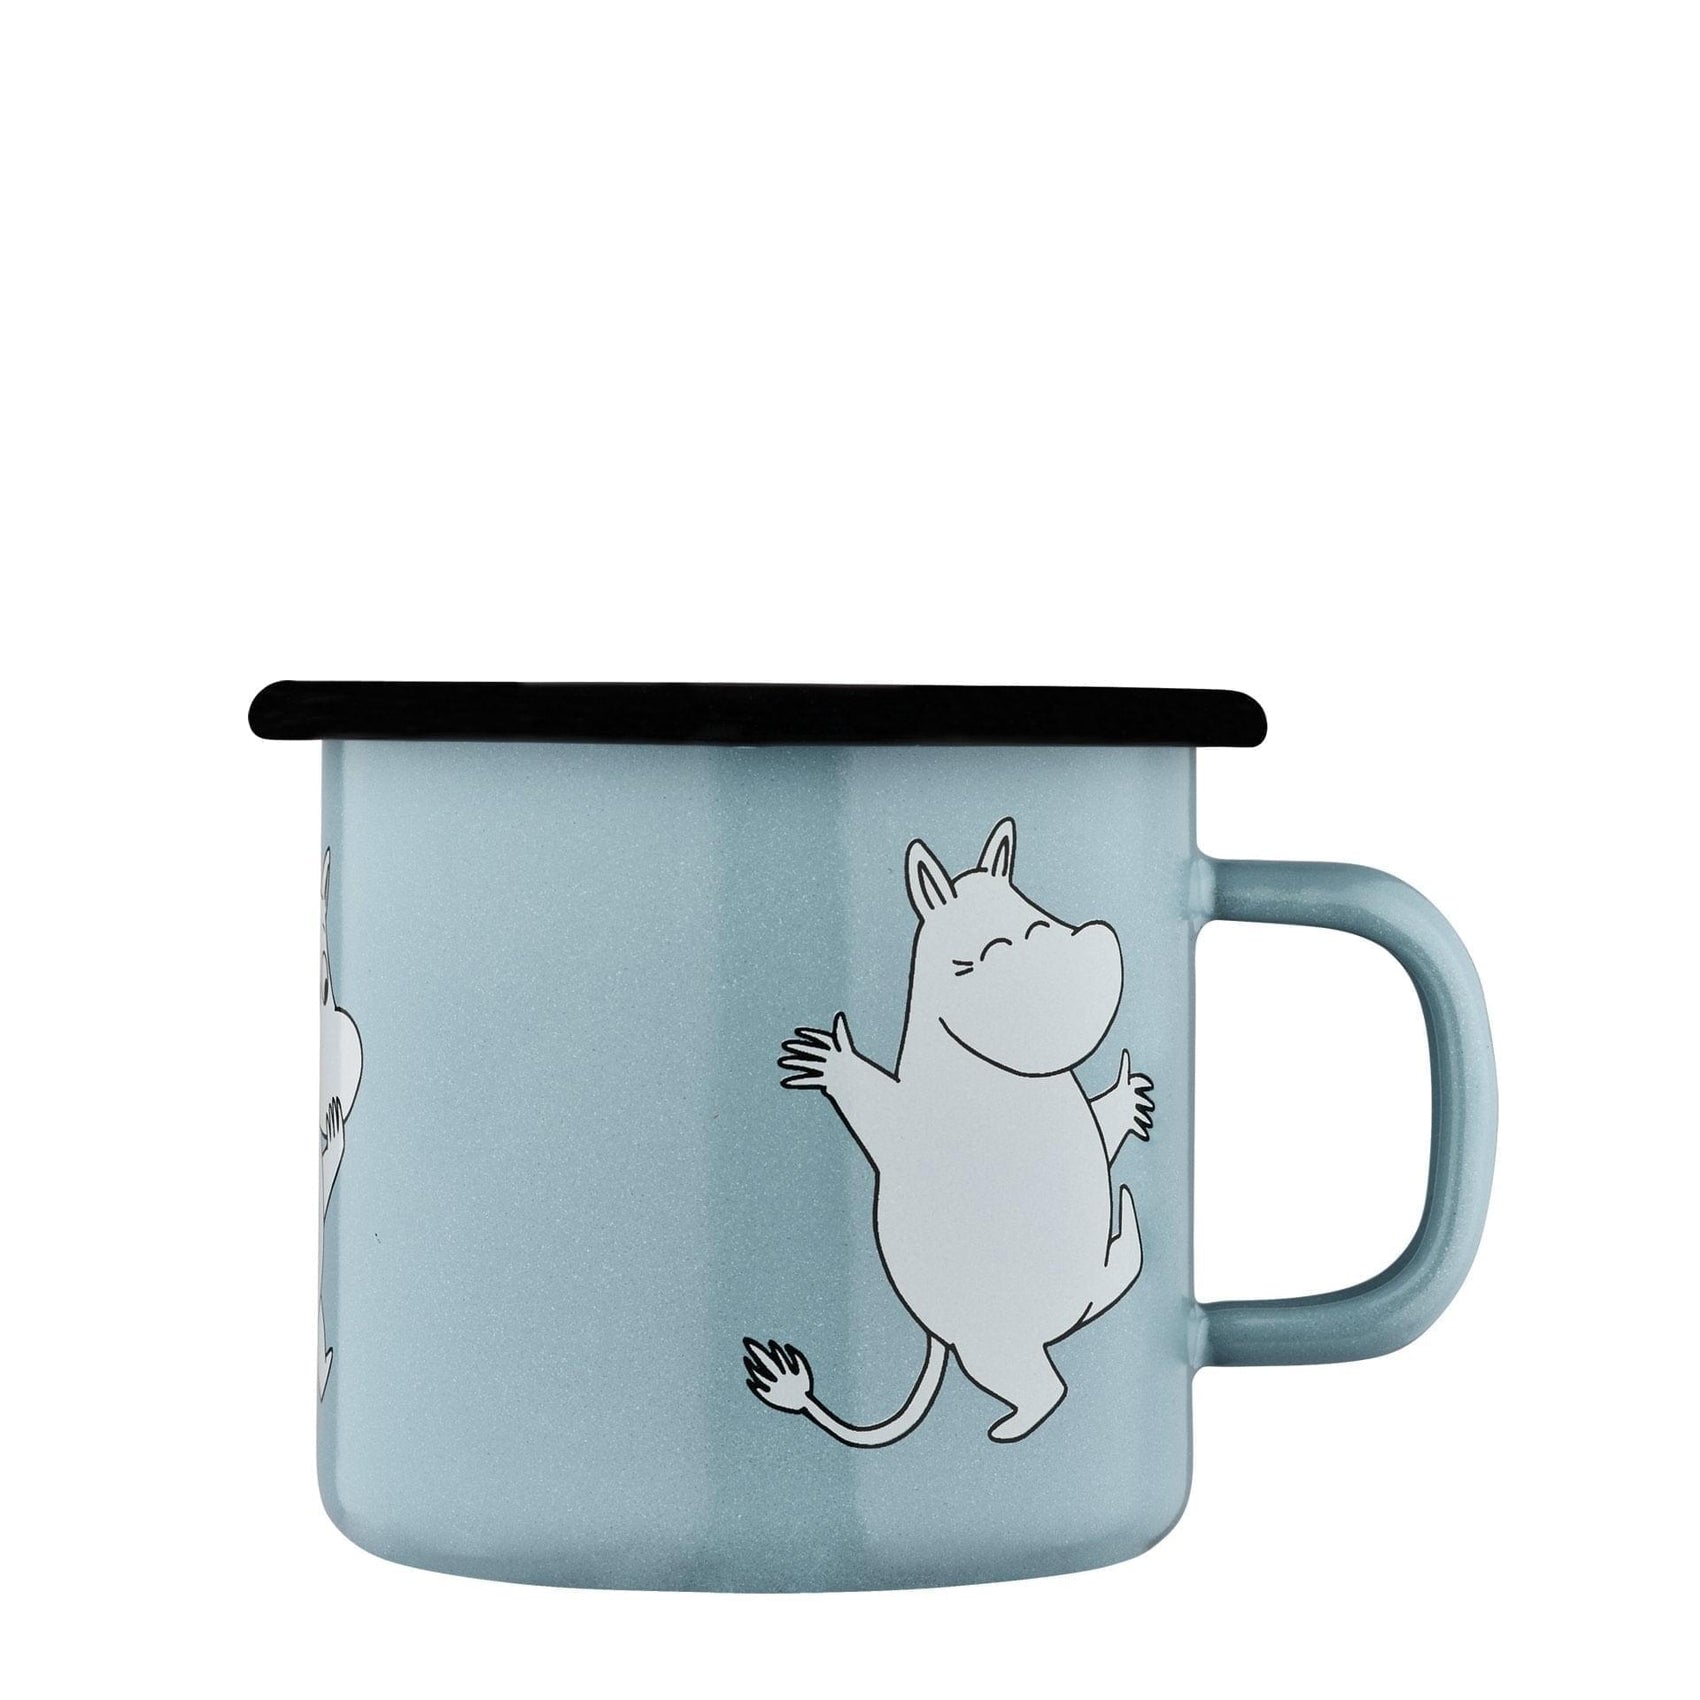 The Moomins enamel mug 2.5dl light blue